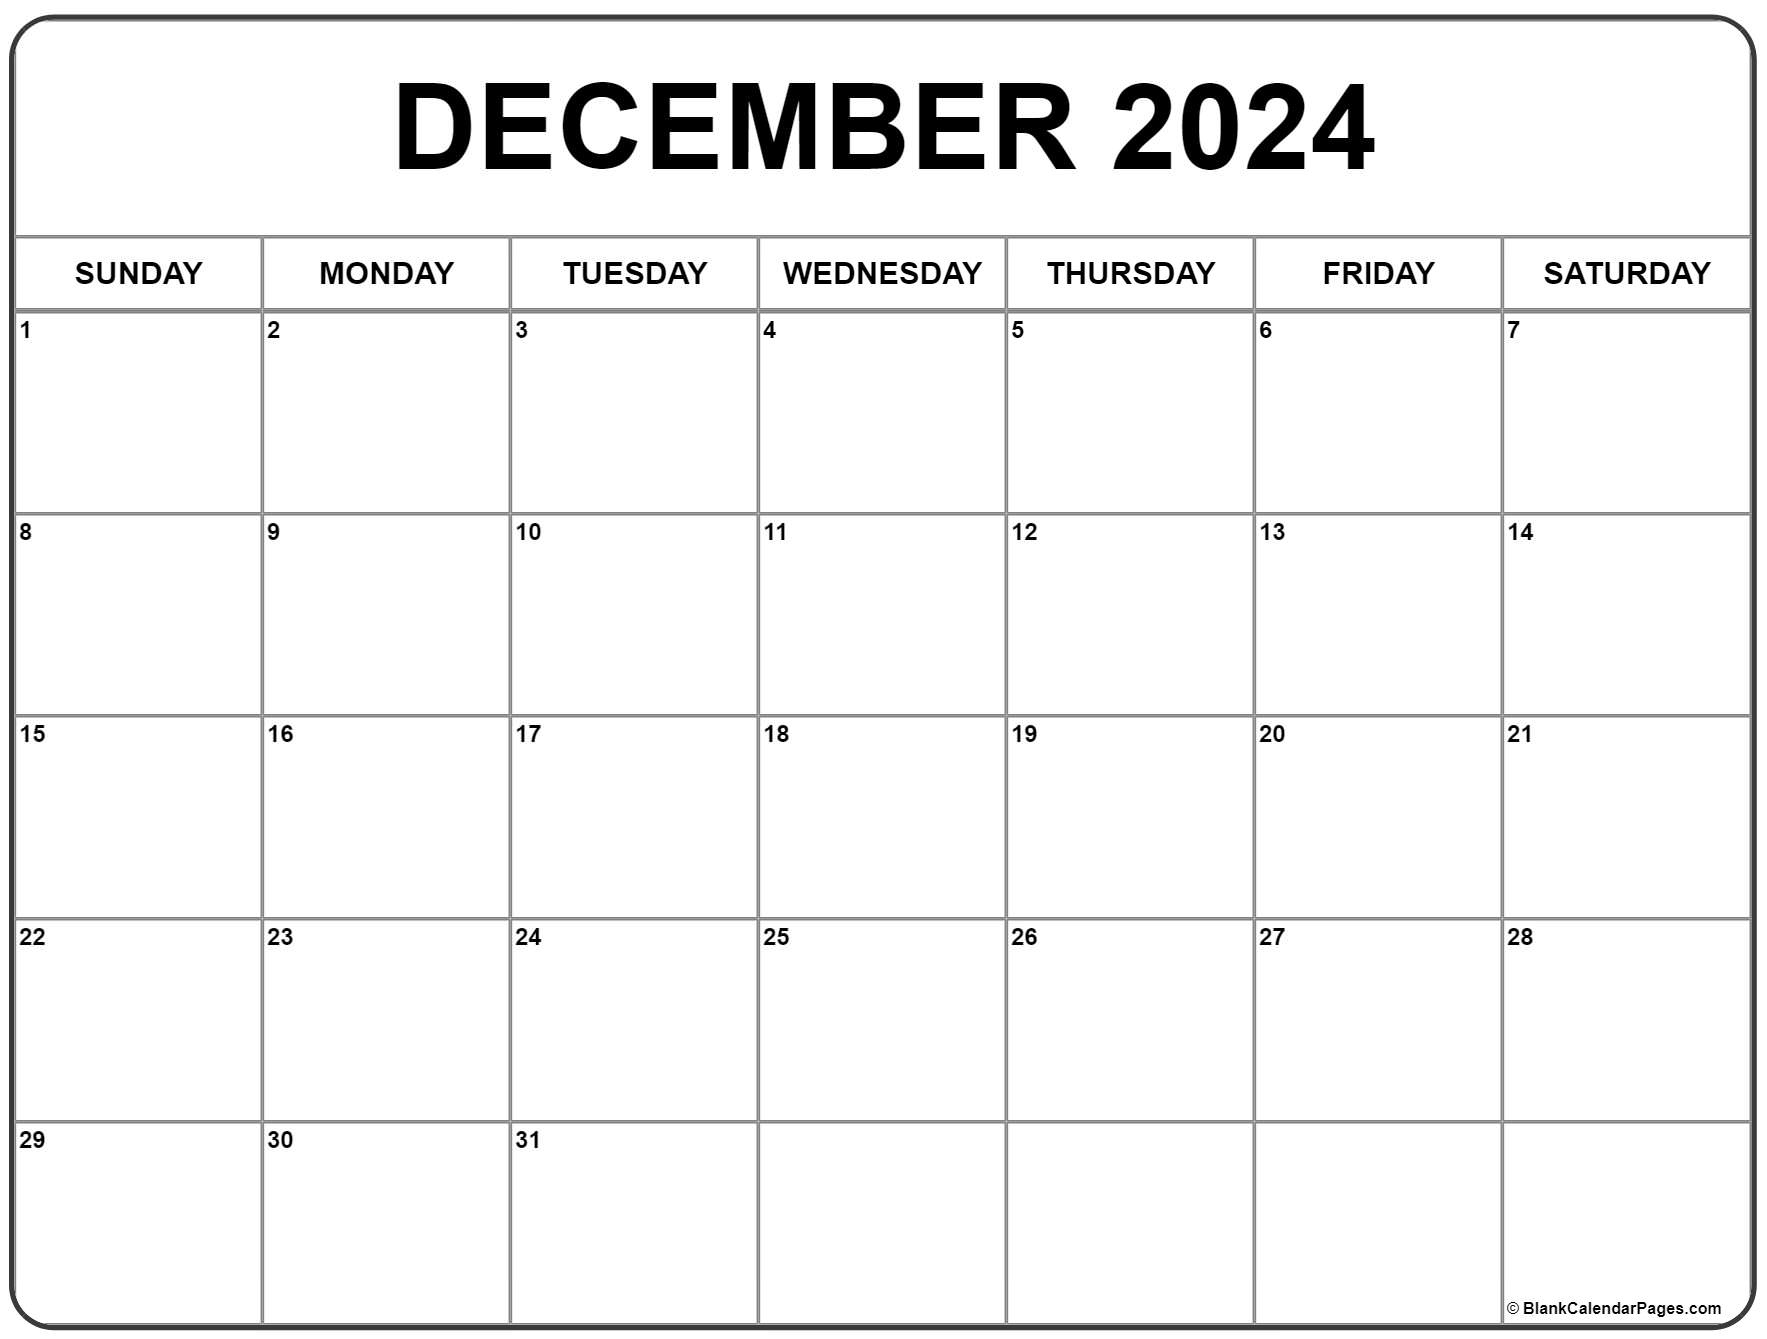 December 2024 Calendar | Free Printable Calendar with Free Printable Calendar 2024 Deember